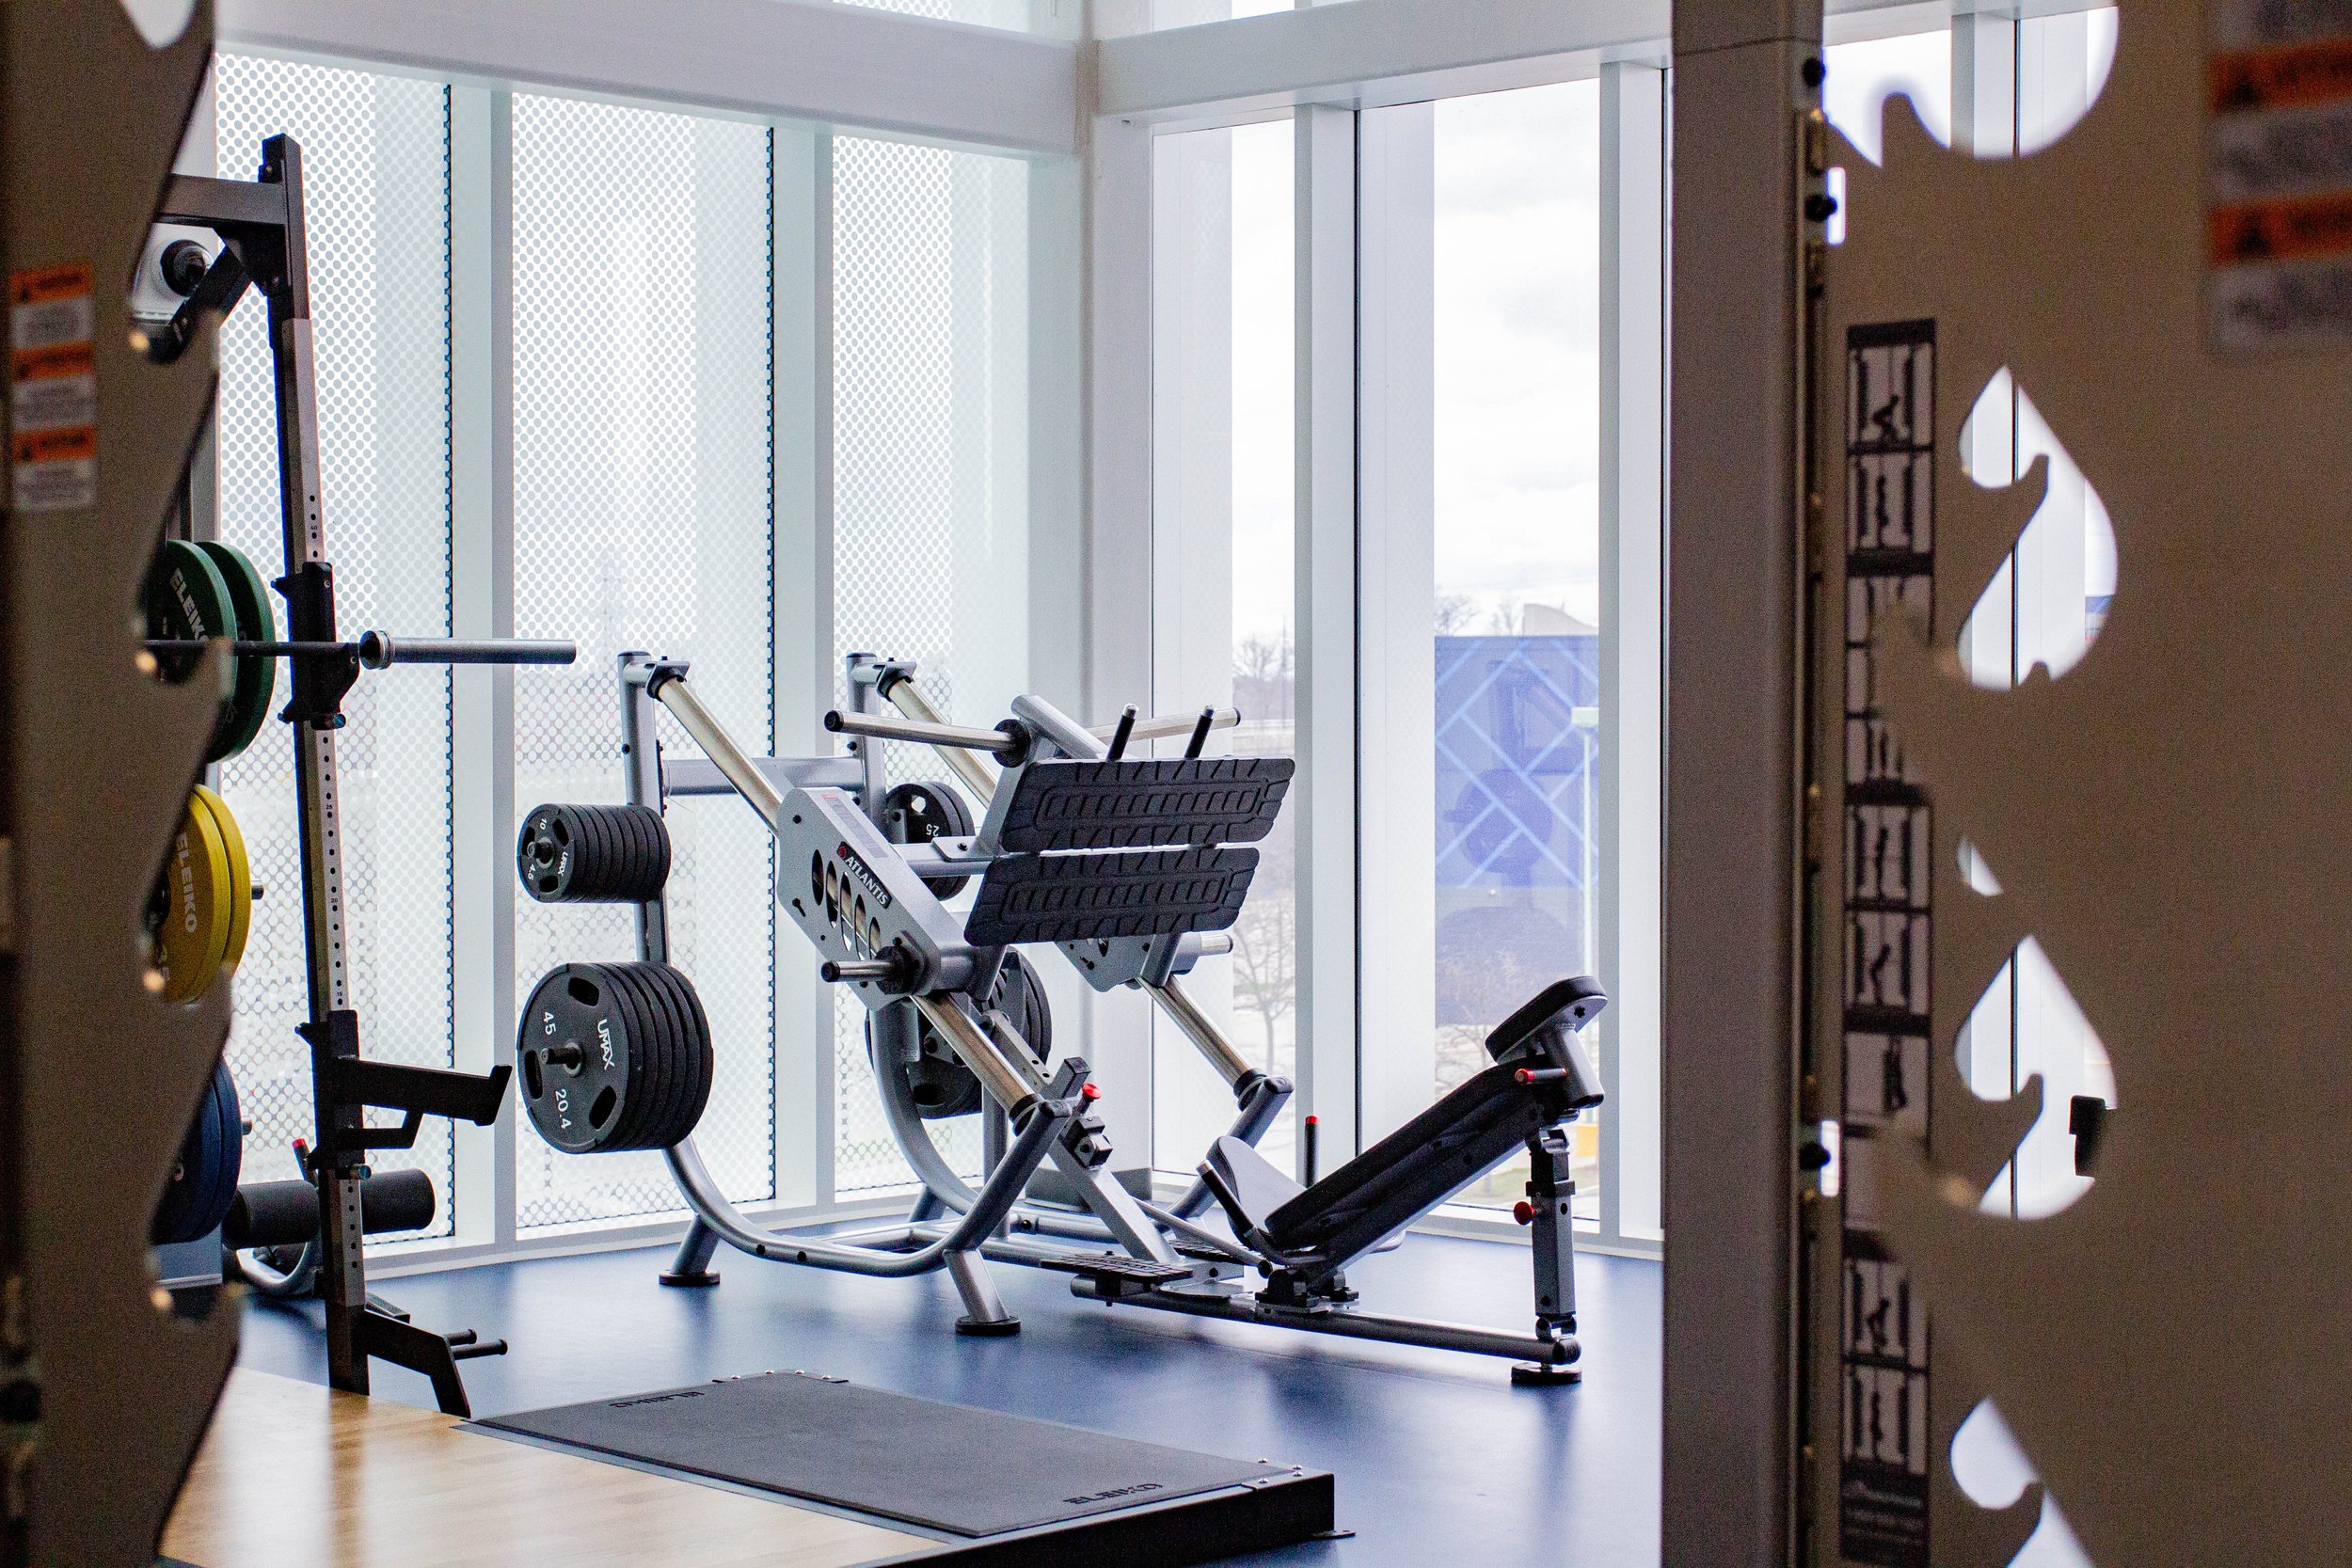  Leg press machine inside the HMC Student Centre Gym near a glass window.    